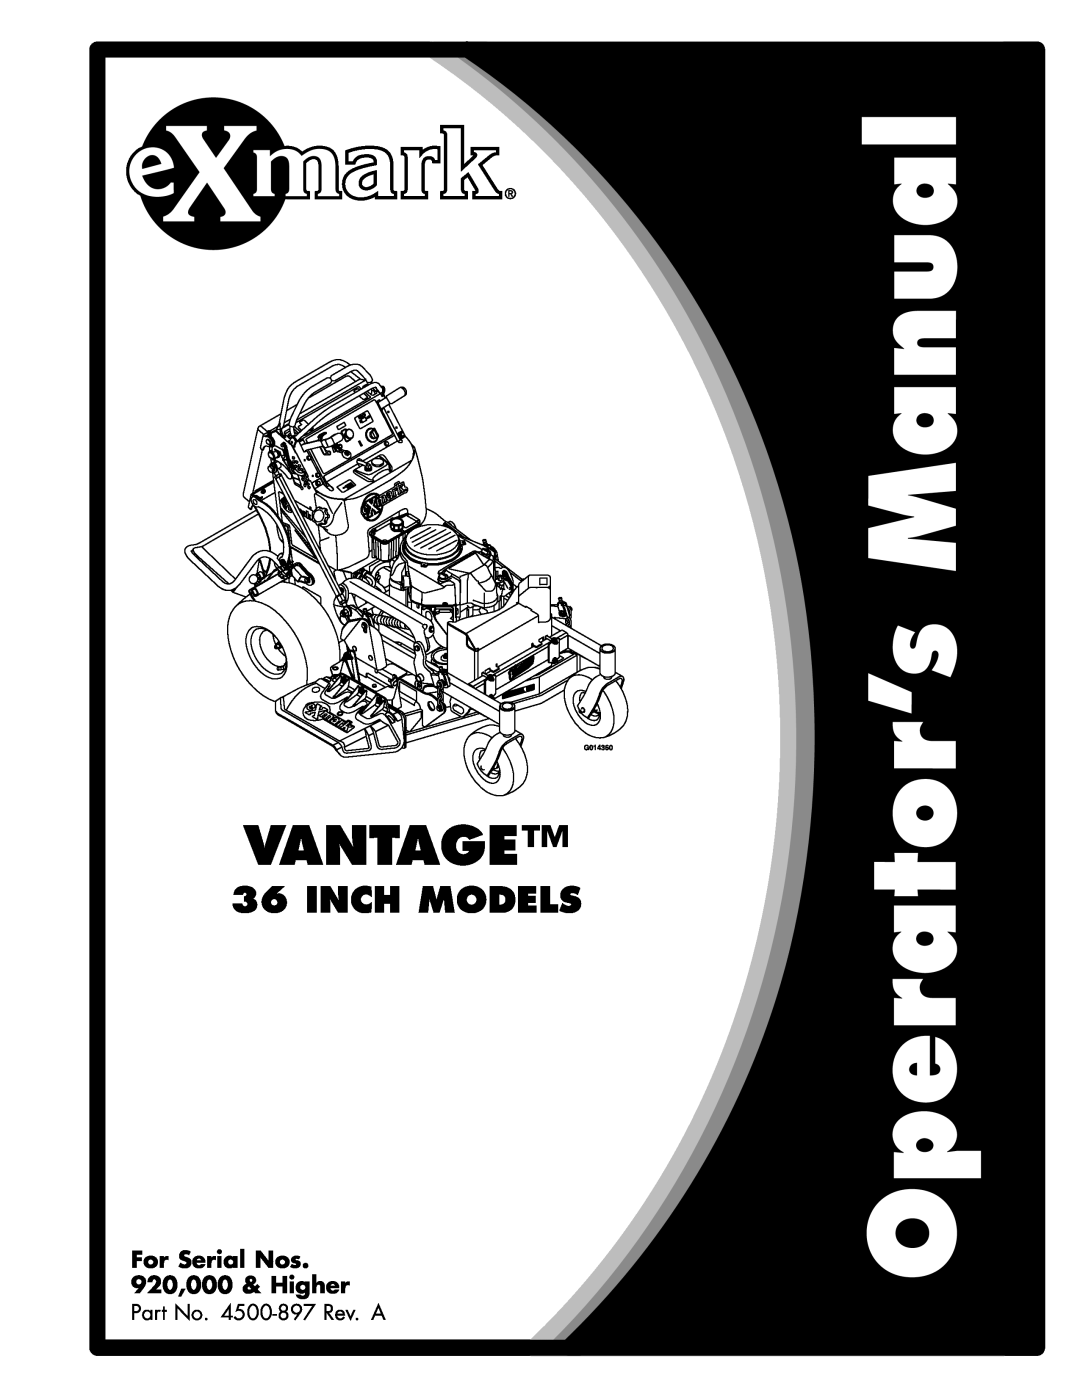 Exmark 000 & higher manual Vantage, Inch Models, For Serial Nos 920,000 & Higher, Part No. 4500-897Rev. A 